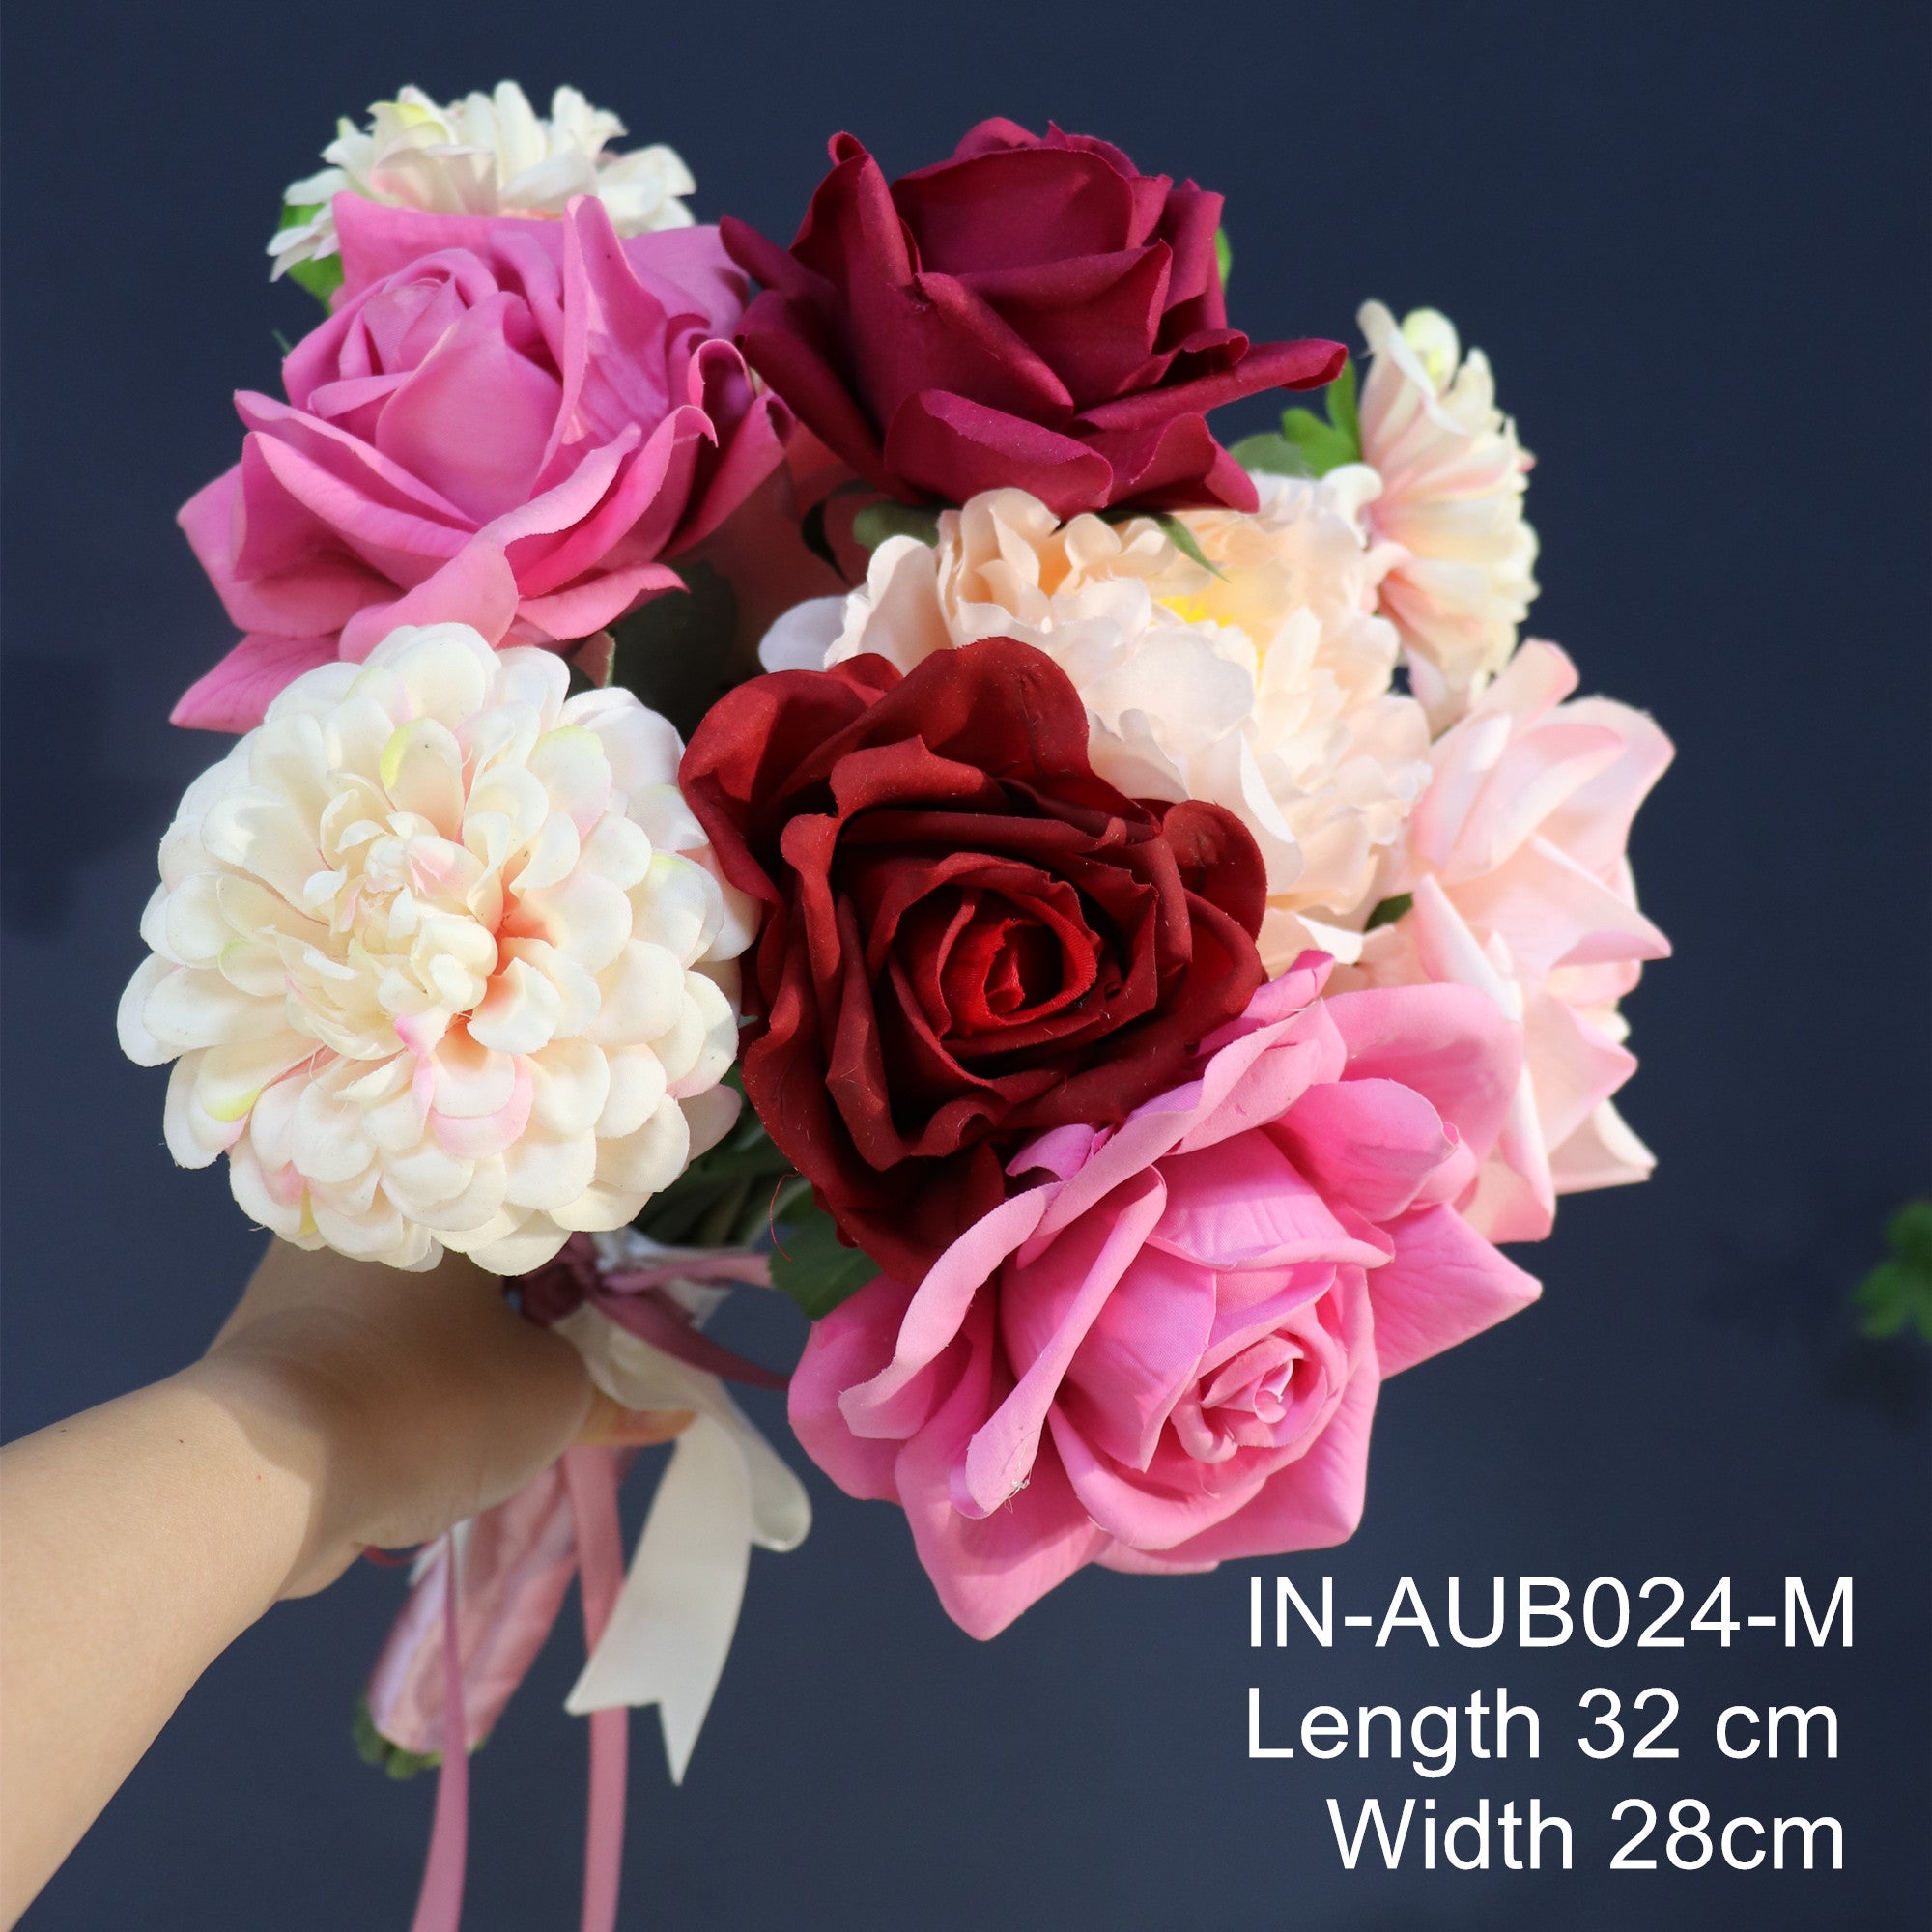 Red Velvet - Bouquets (3 sizes)